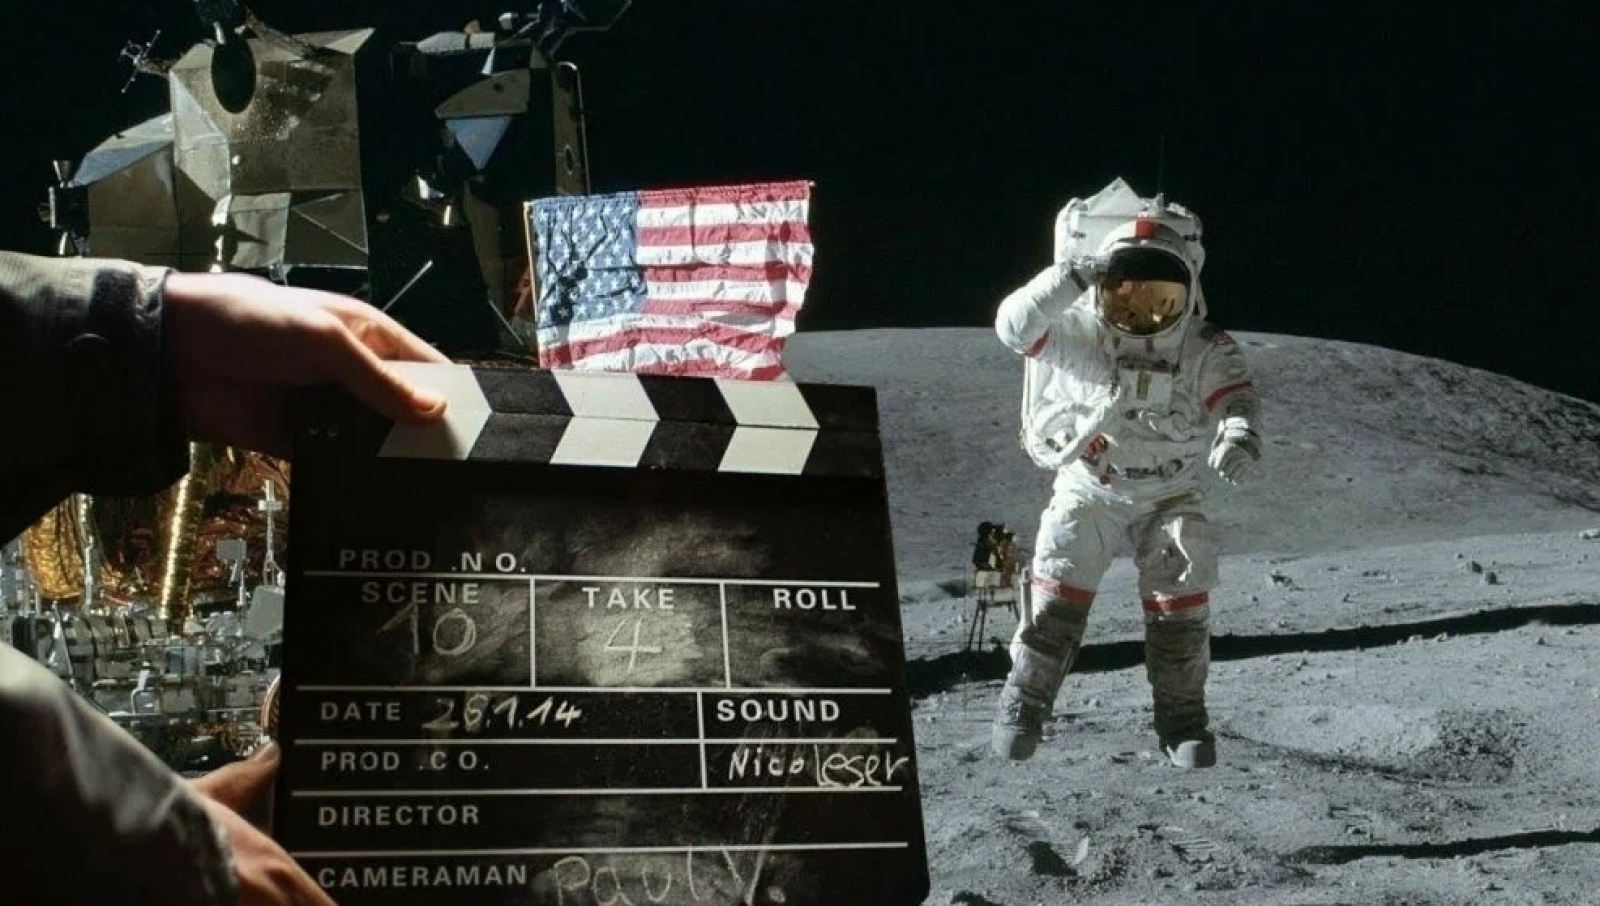 Сколько американцев было в космосе. Американцы на Луне. Полет американцев на луну. Съёмка высадки на луну американцев. Американцы были на Луне.